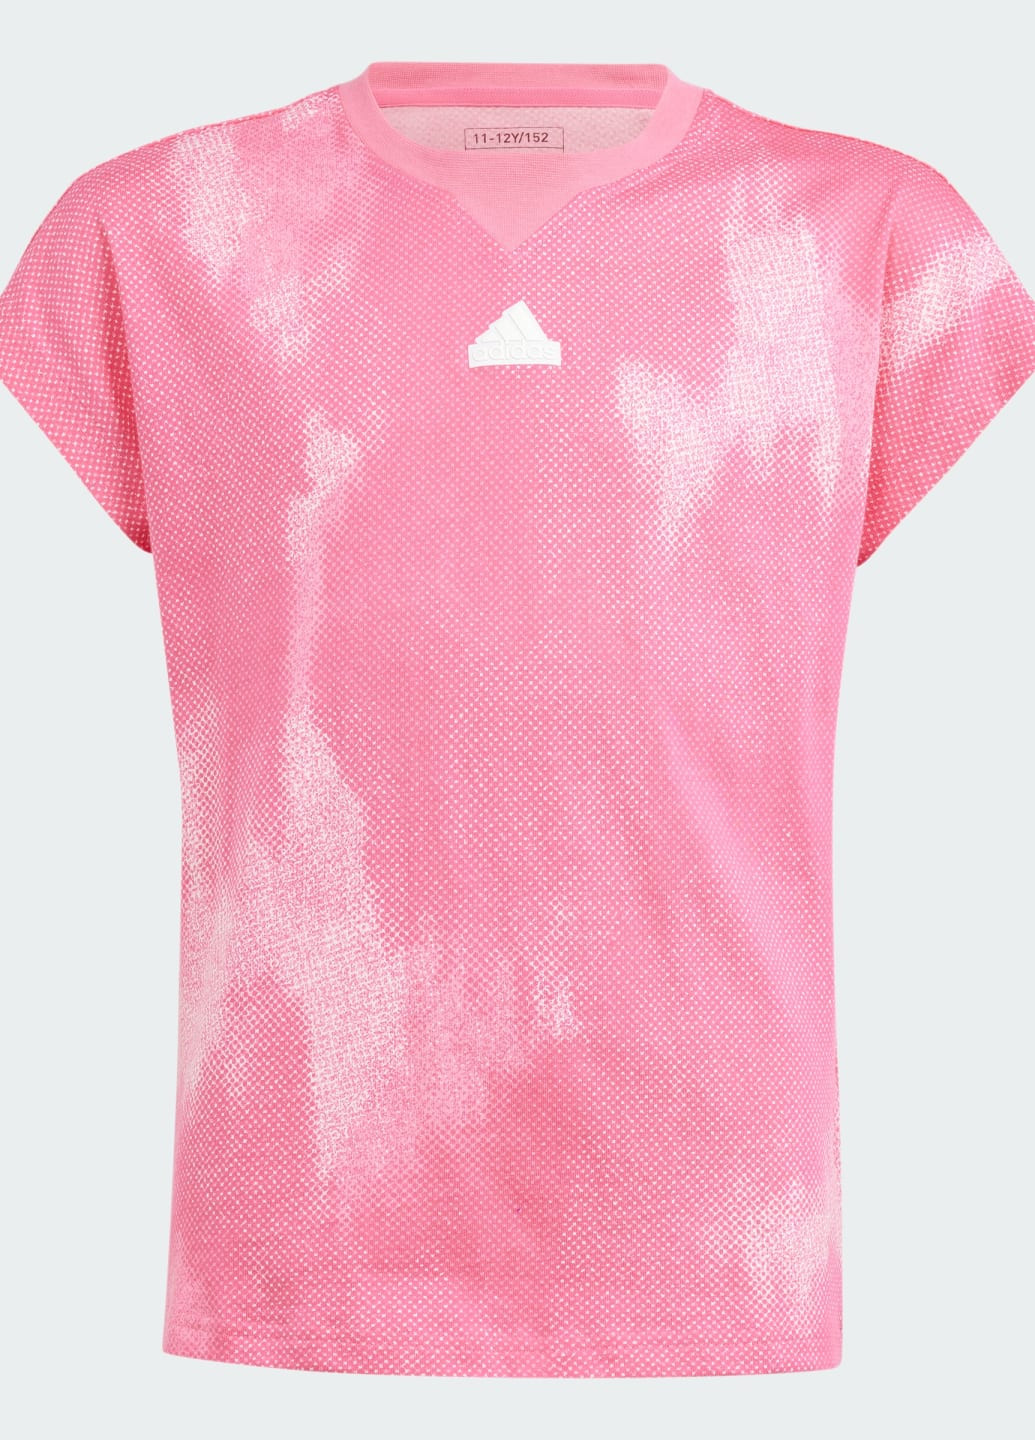 Розовая демисезонная футболка future icons allover print cotton kids adidas